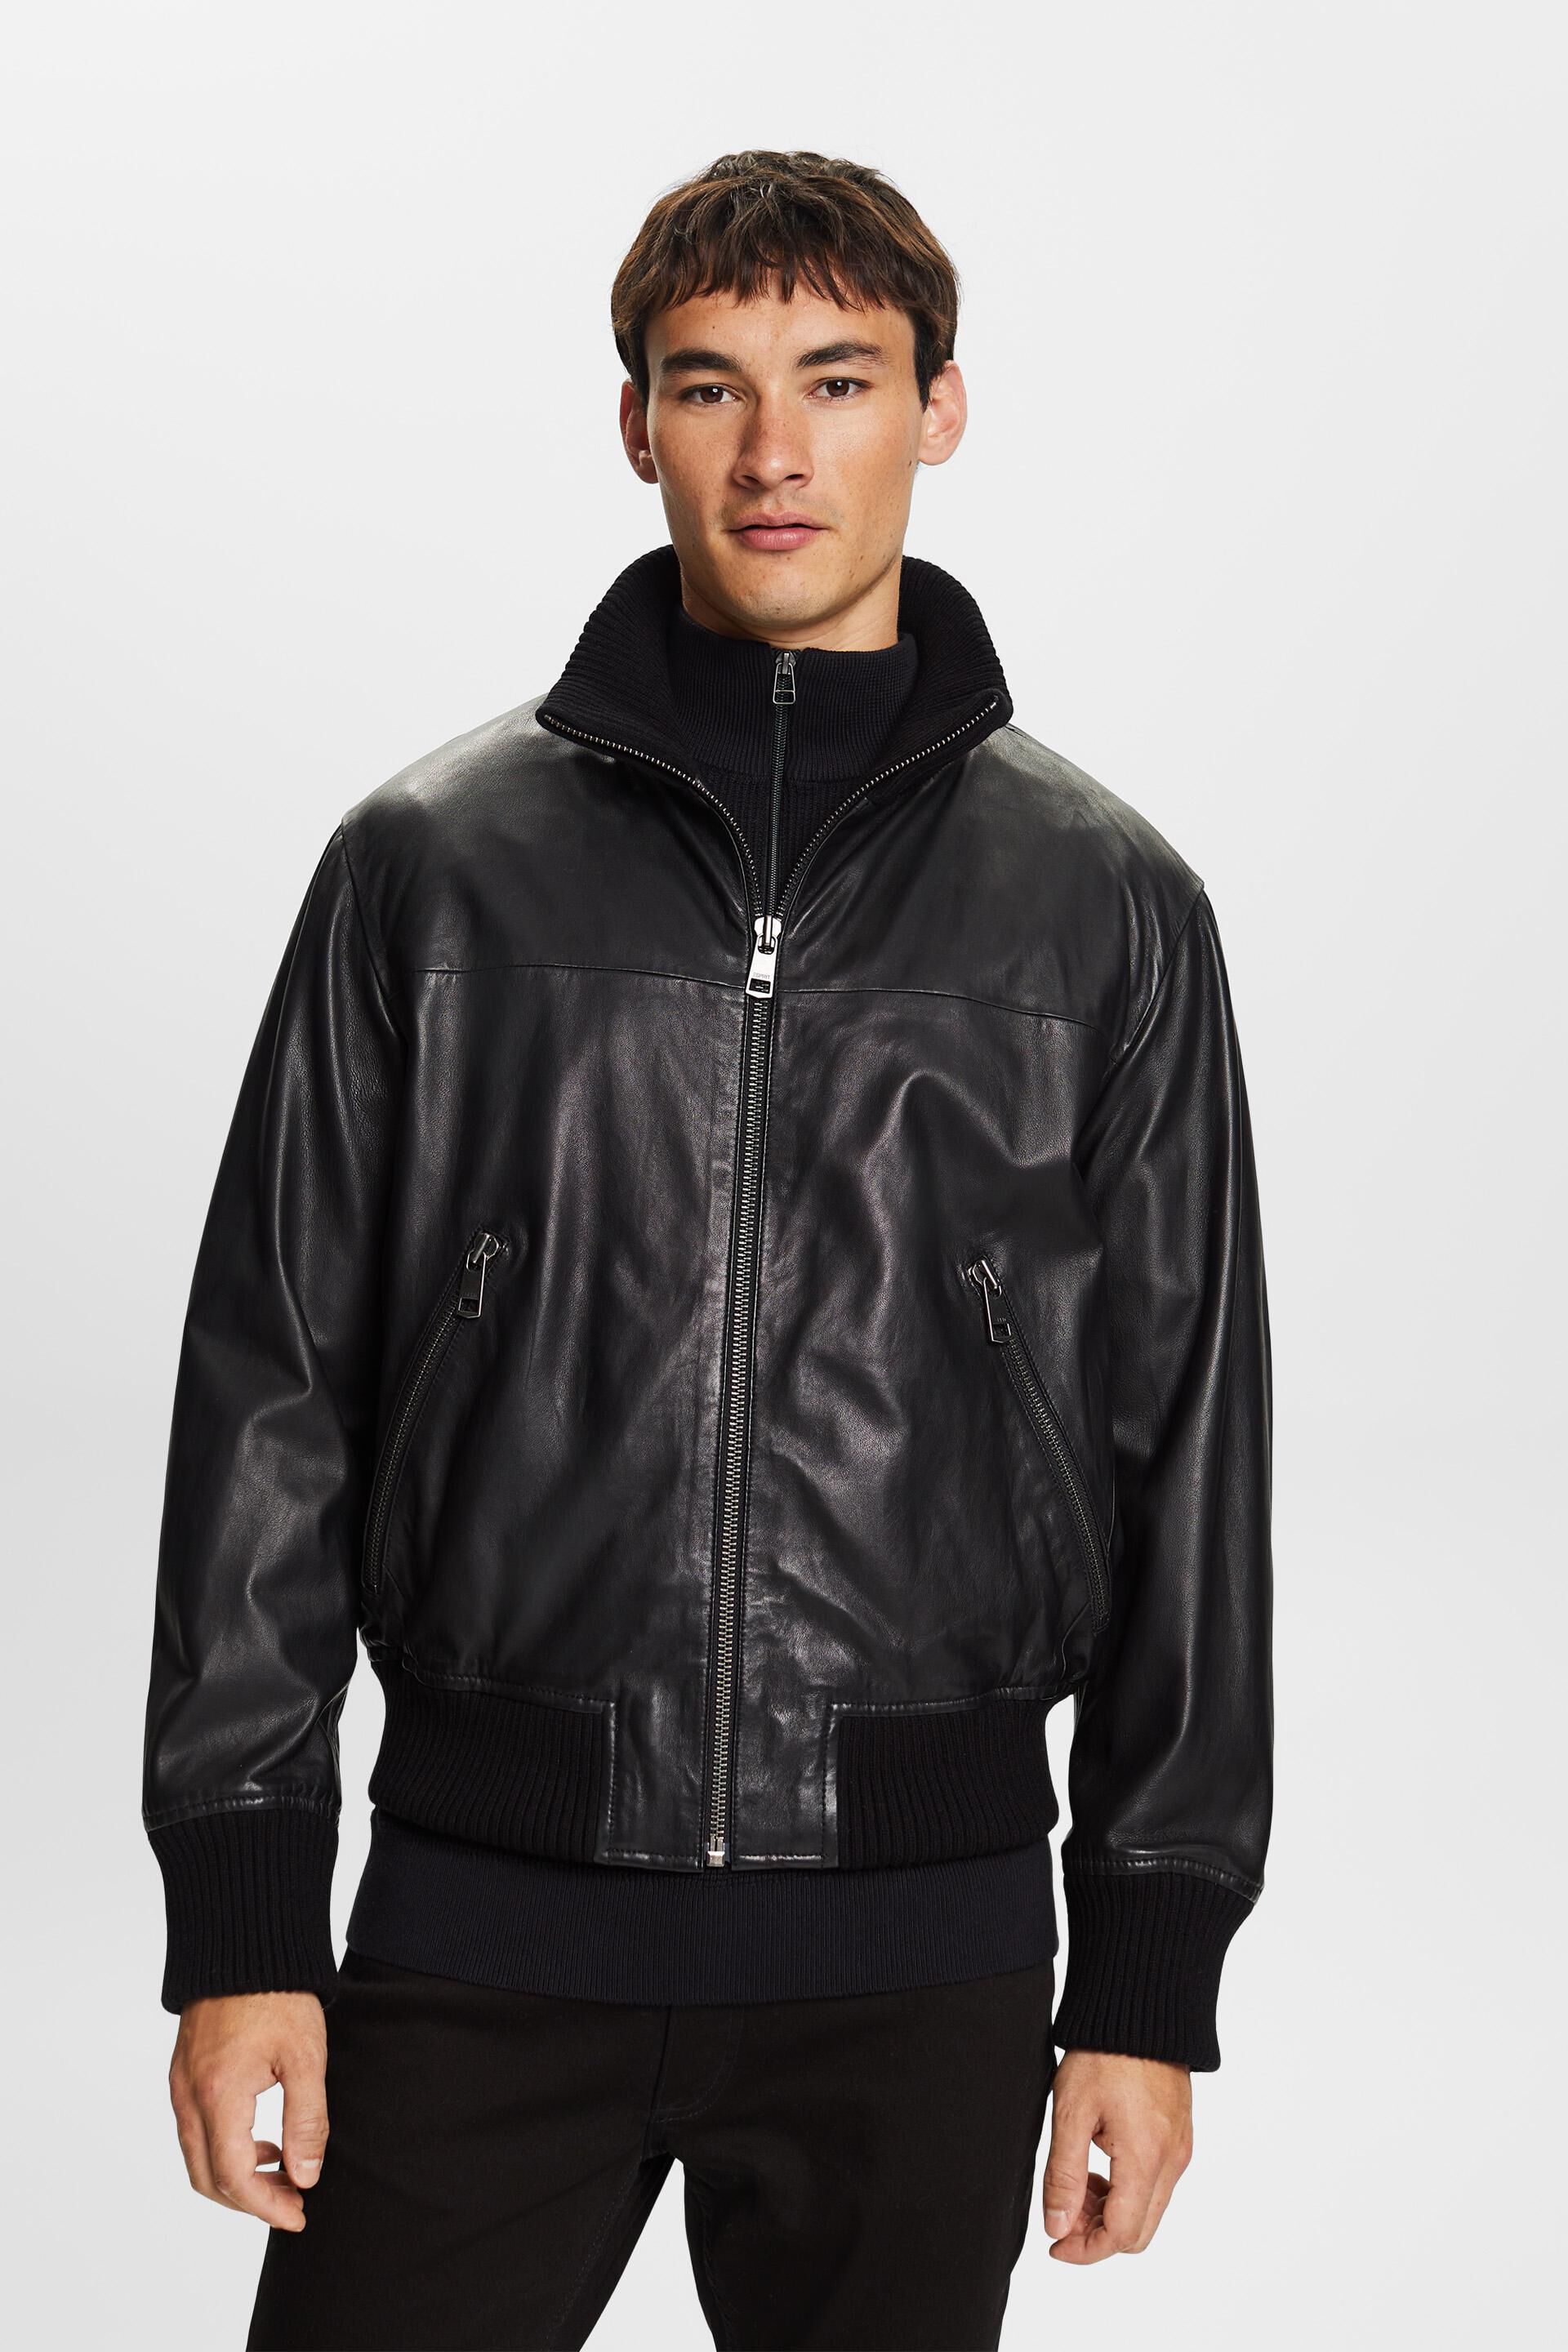 ESPRIT - Leather Bomber Jacket at our online shop